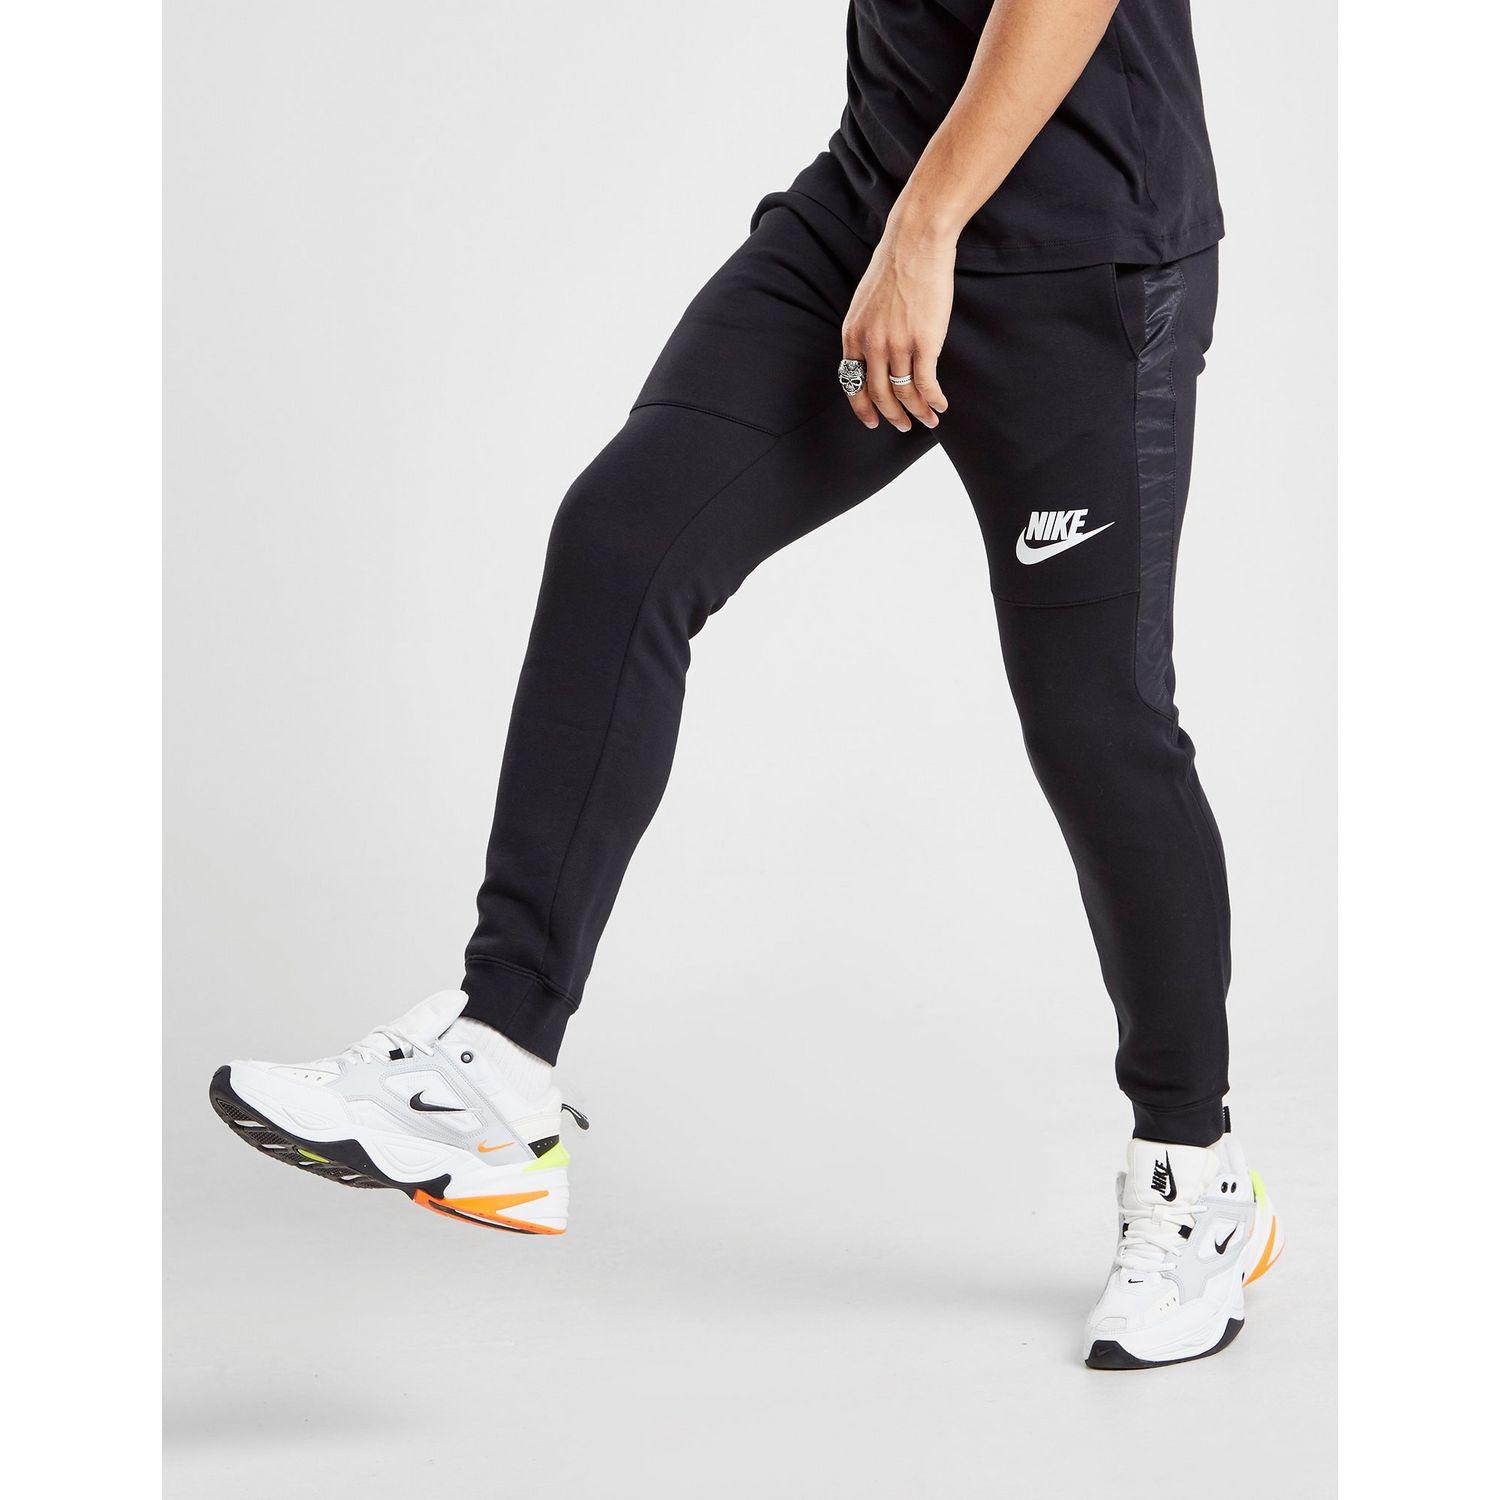 Nike Hybrid Fleece Joggers in Black for Men - Lyst